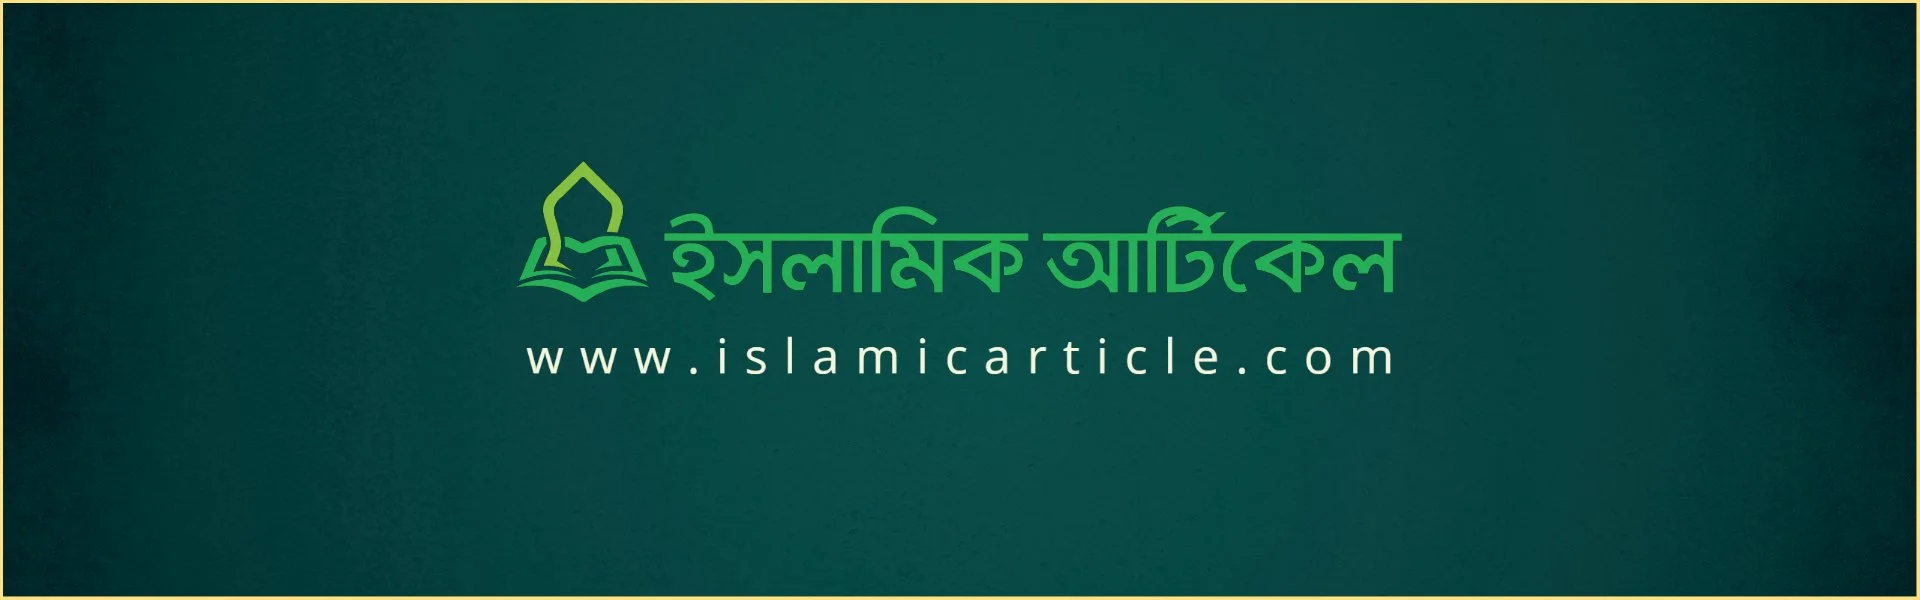 islamicarticle